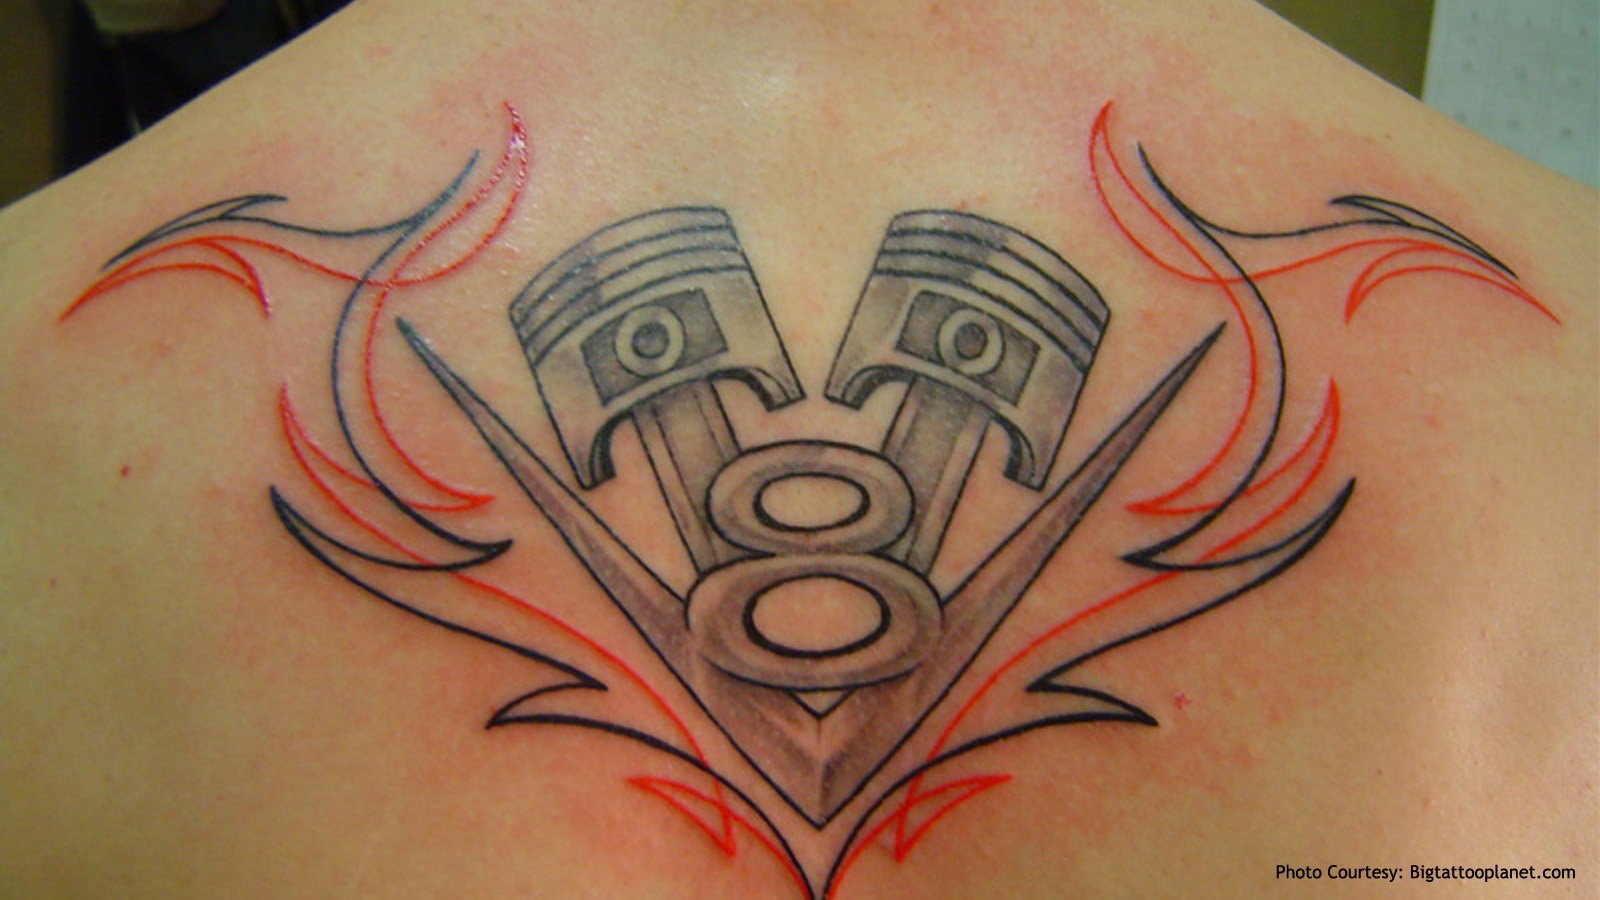 GM TATTOO  Tattoo tattoo tattoos tat ink inked TFLers tattooed  tattoist coverup art design instaart instagood sleevetattoo  handtattoo chesttattoo photooftheday tatted instatattoo bodyart  tatts tats amazingink tattoolecce  Facebook